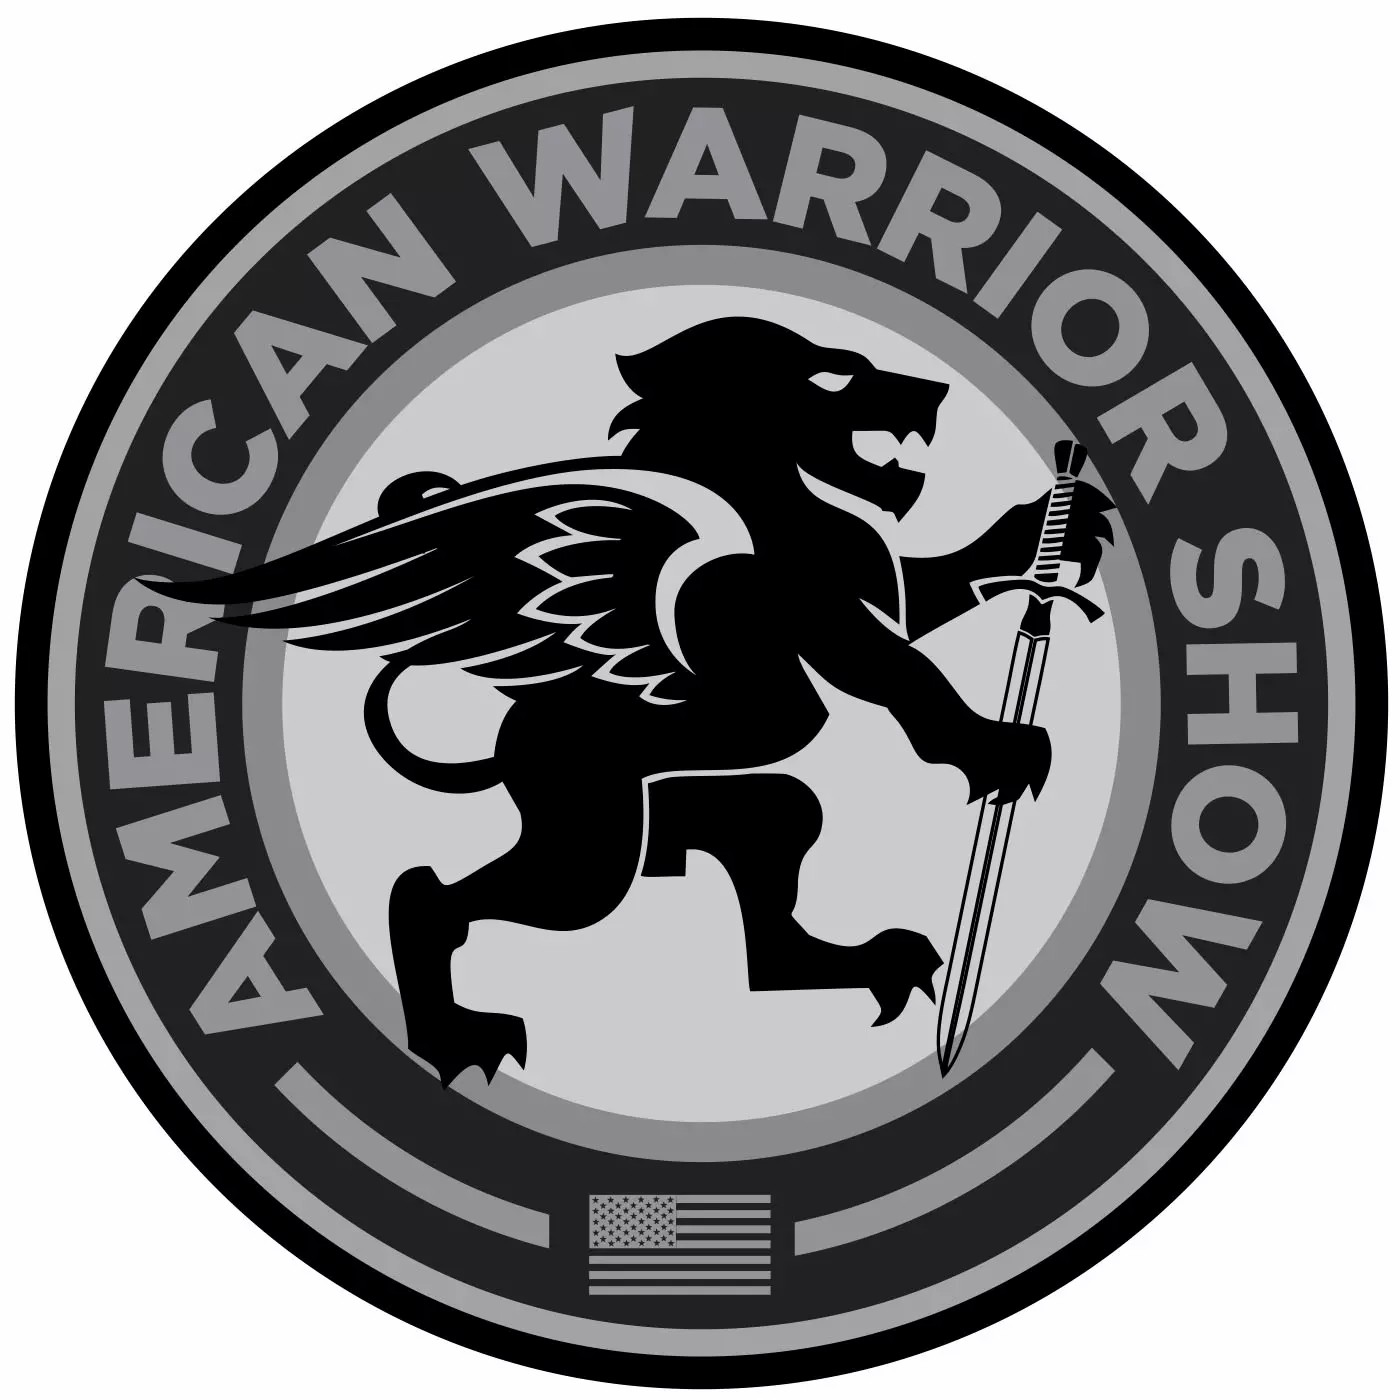 American Warrior Society Medical